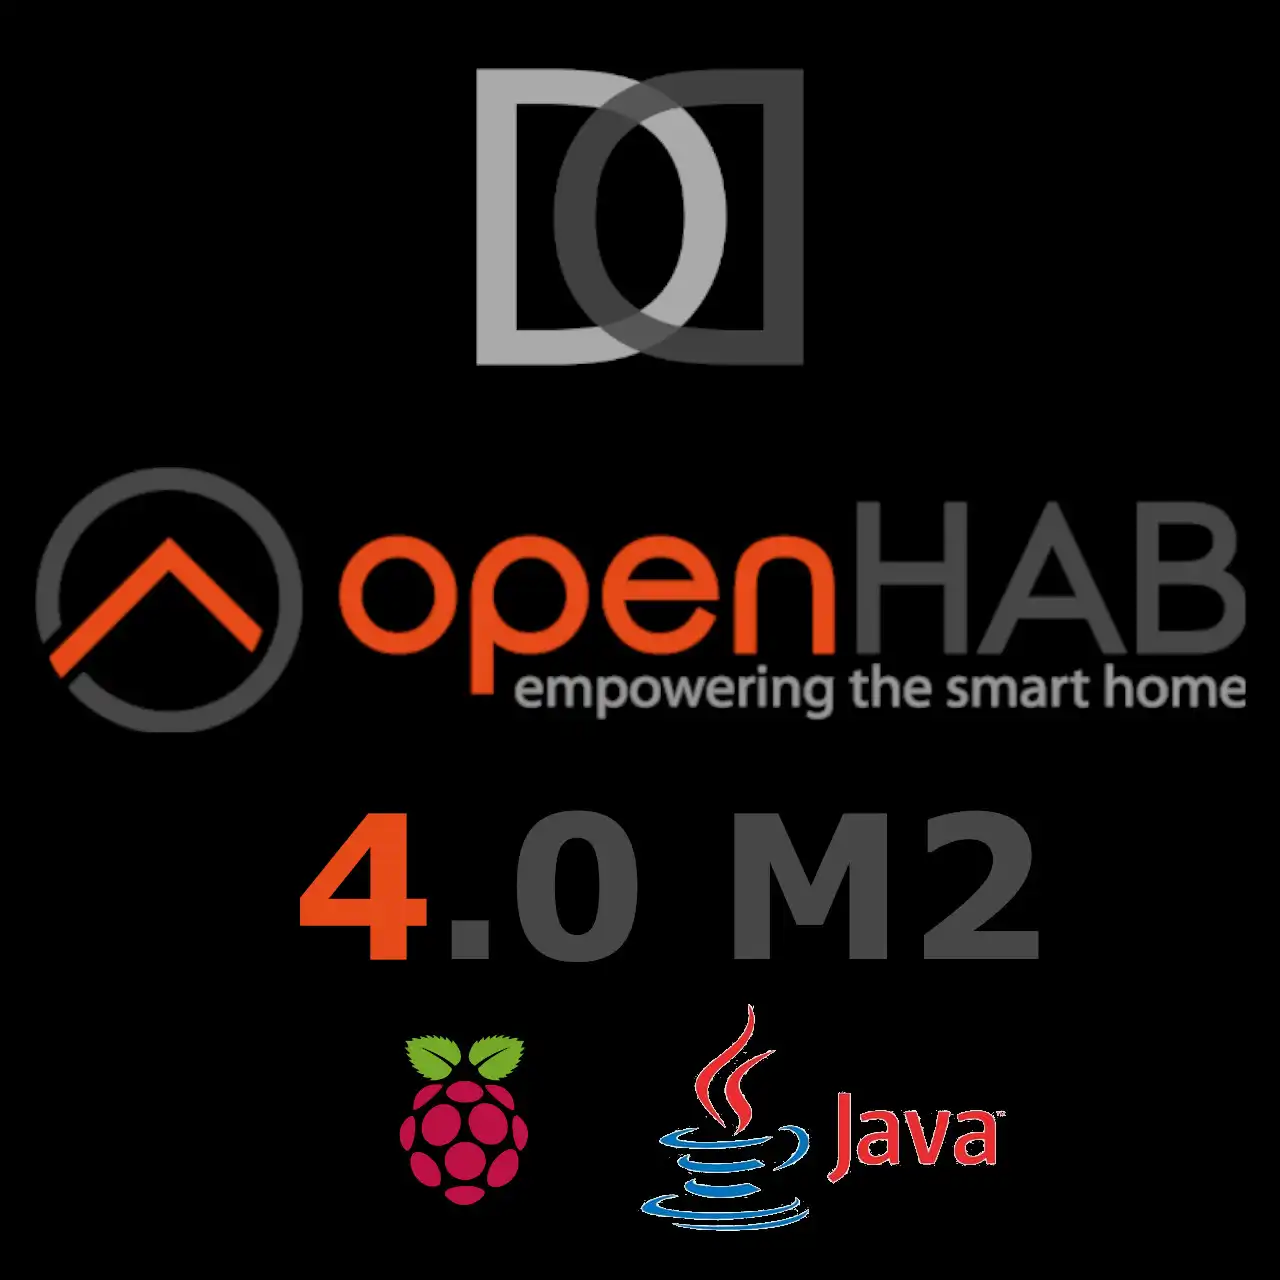 OpenHAB 4 - Aggiornamento diretto a Java 17 e OPENHAB 4 M2 - Home Automation System